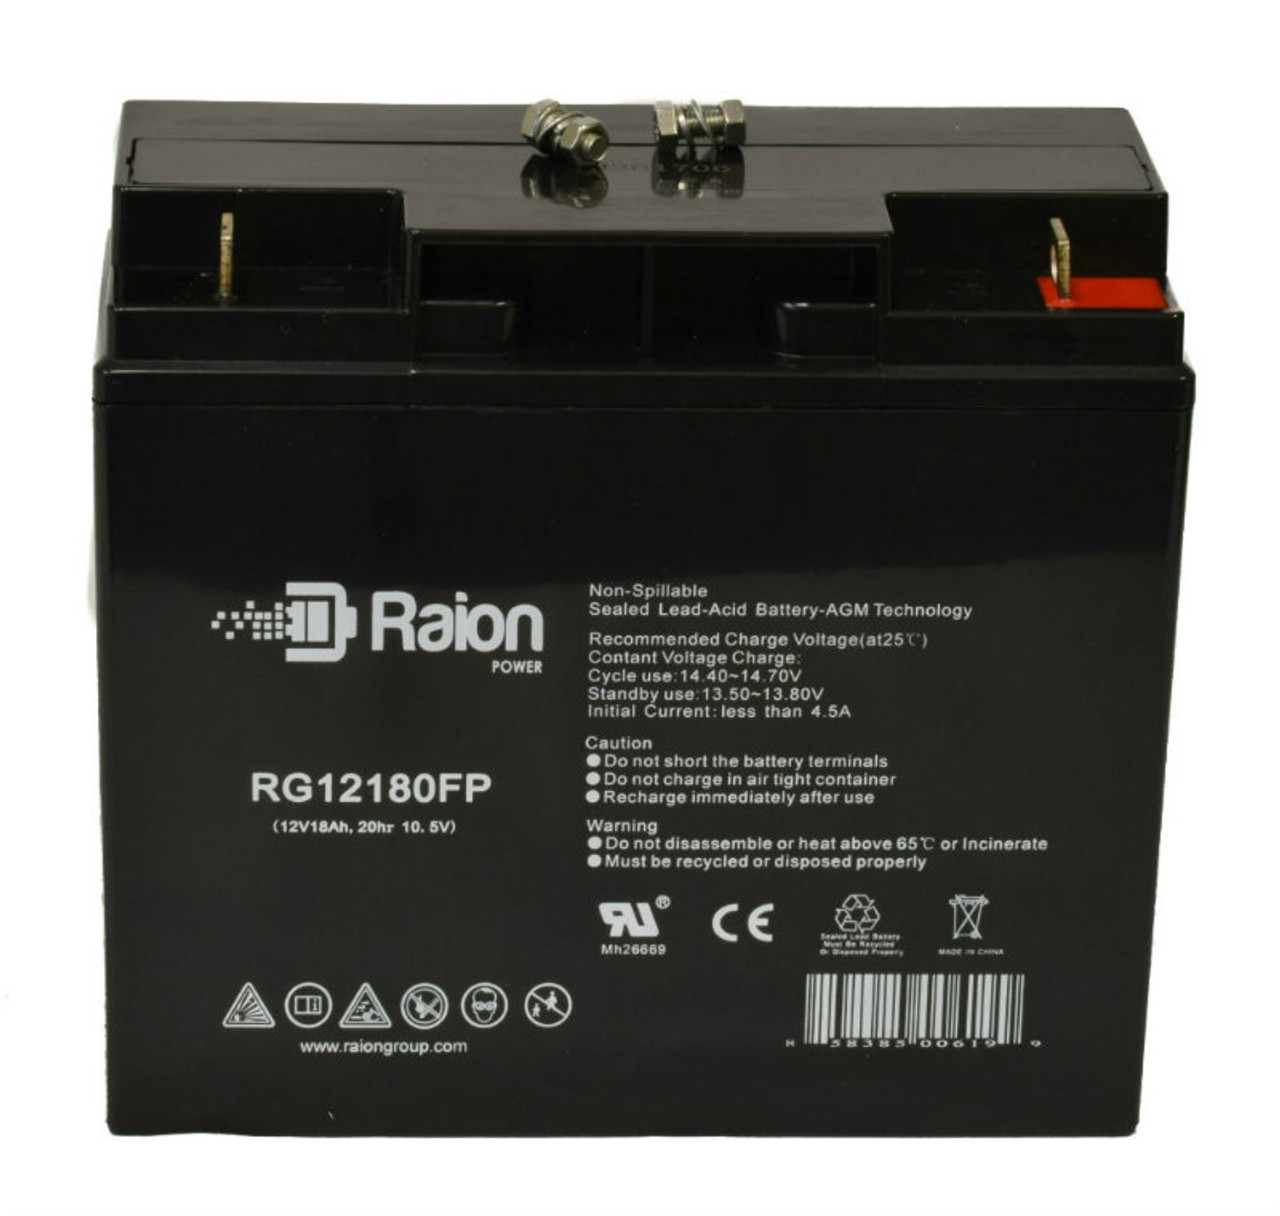 Raion Power RG12180FP 12V 18Ah Lead Acid Battery for FIAMM FGC21803